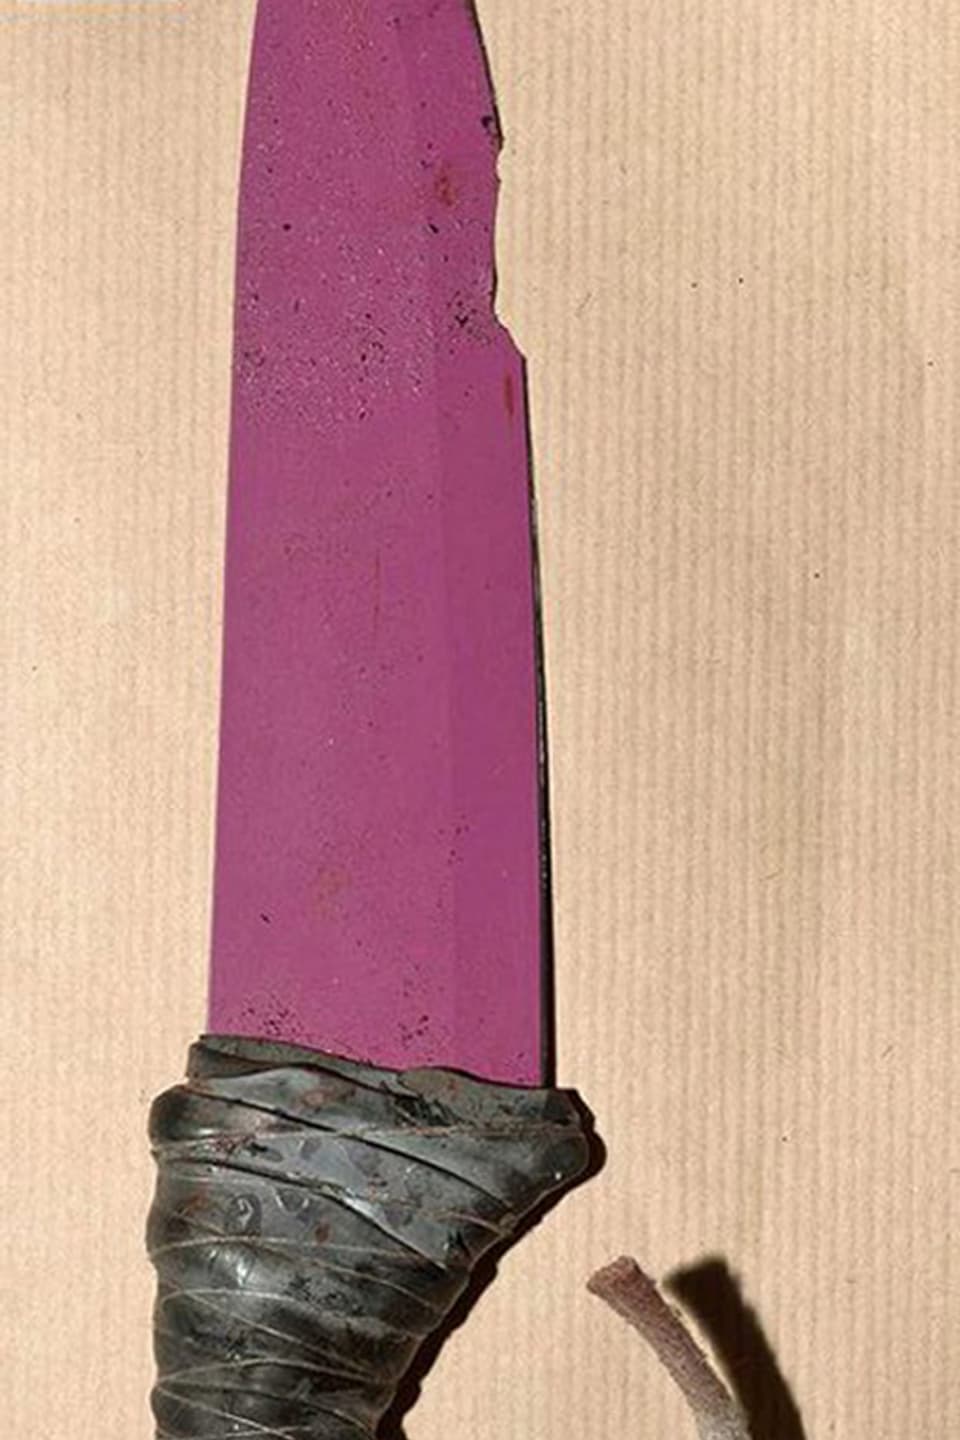 Pinkfarbenes Keramikmesser, mit Leder umwickelter Griff.